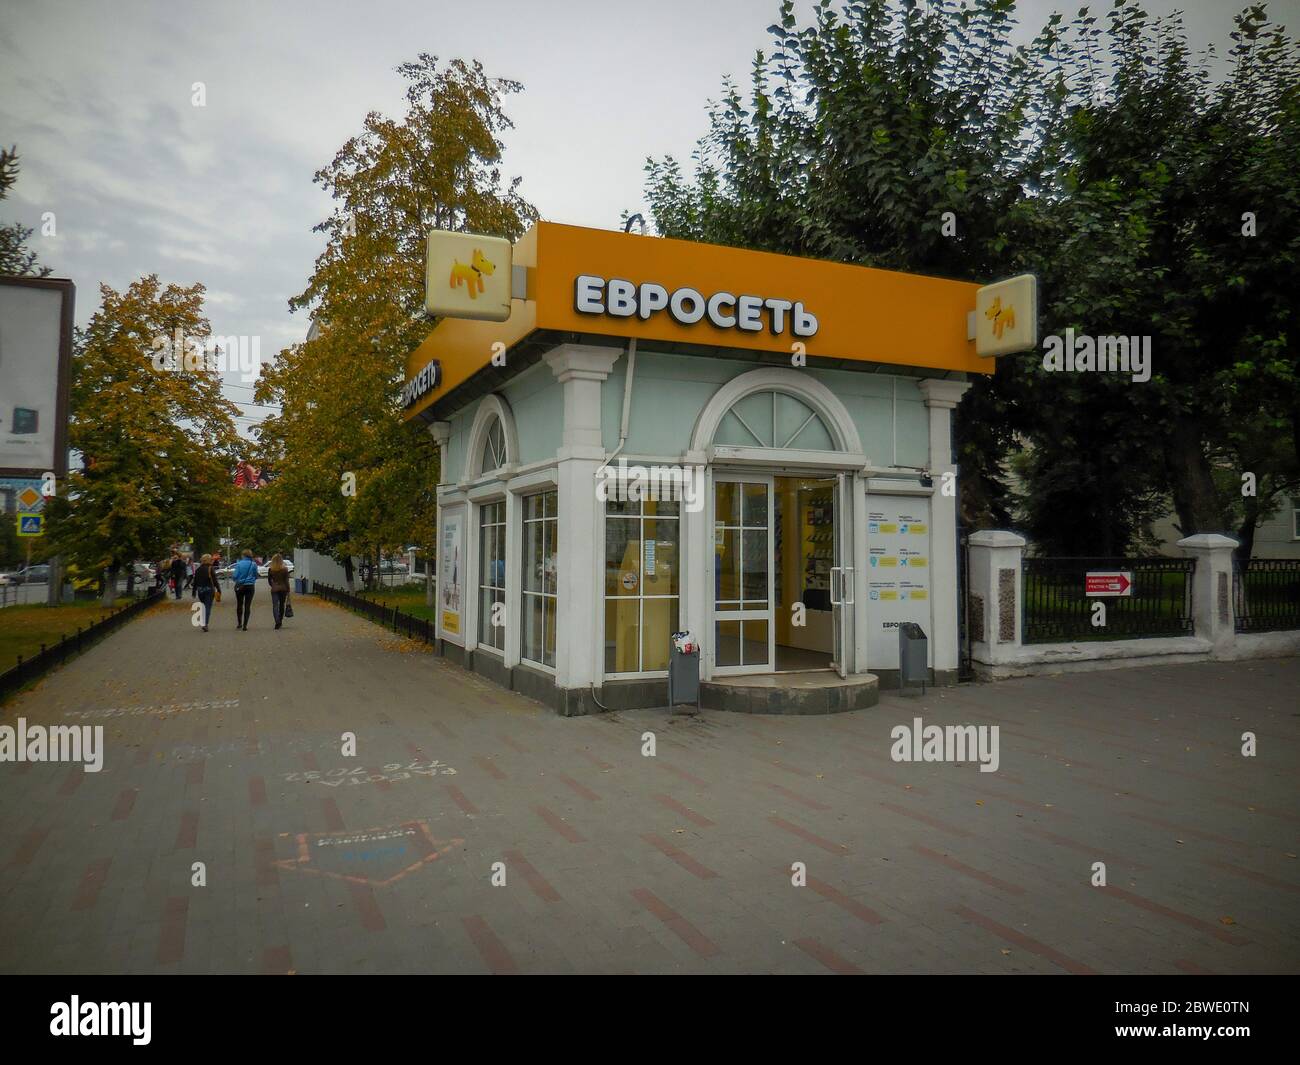 chelyabinsk, russia 06 06 2019: Mobile sales kiosk on the sidewalk in Chelyabinsk, Russia. Translation of text is Euronet network . Stock Photo